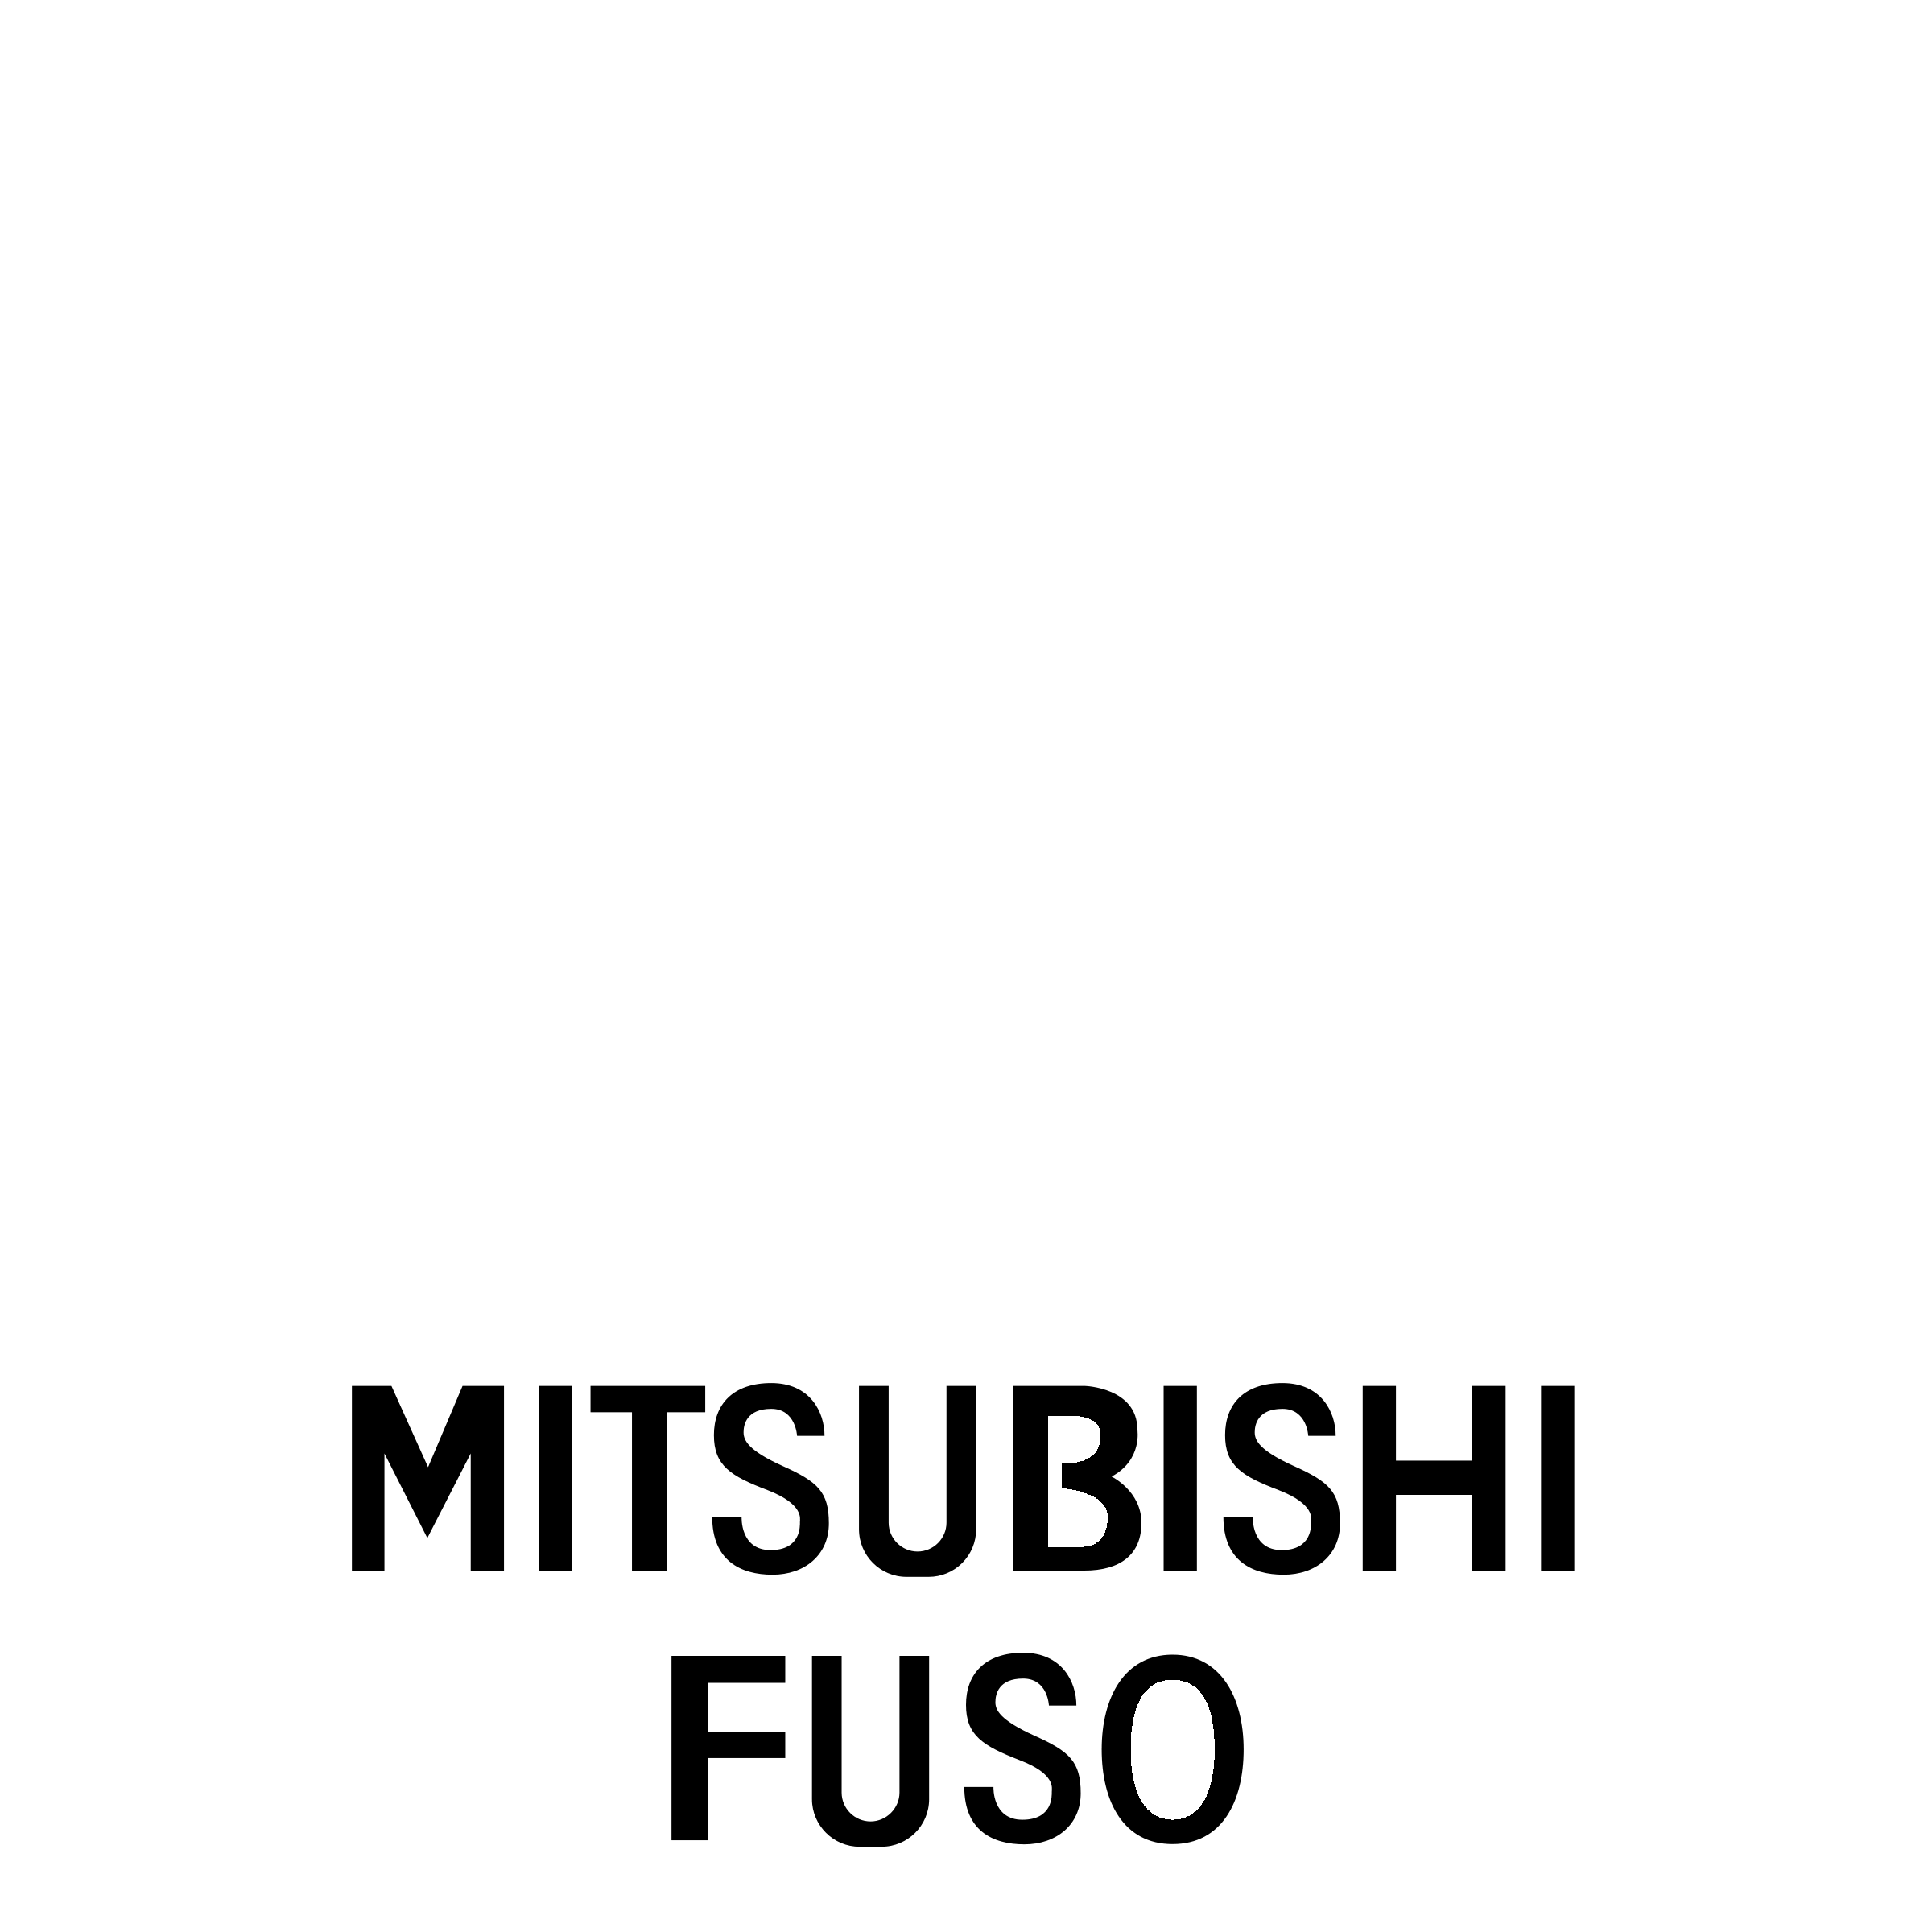 Fuso Logo - Mitsubishi Fuso Logo PNG Transparent & SVG Vector